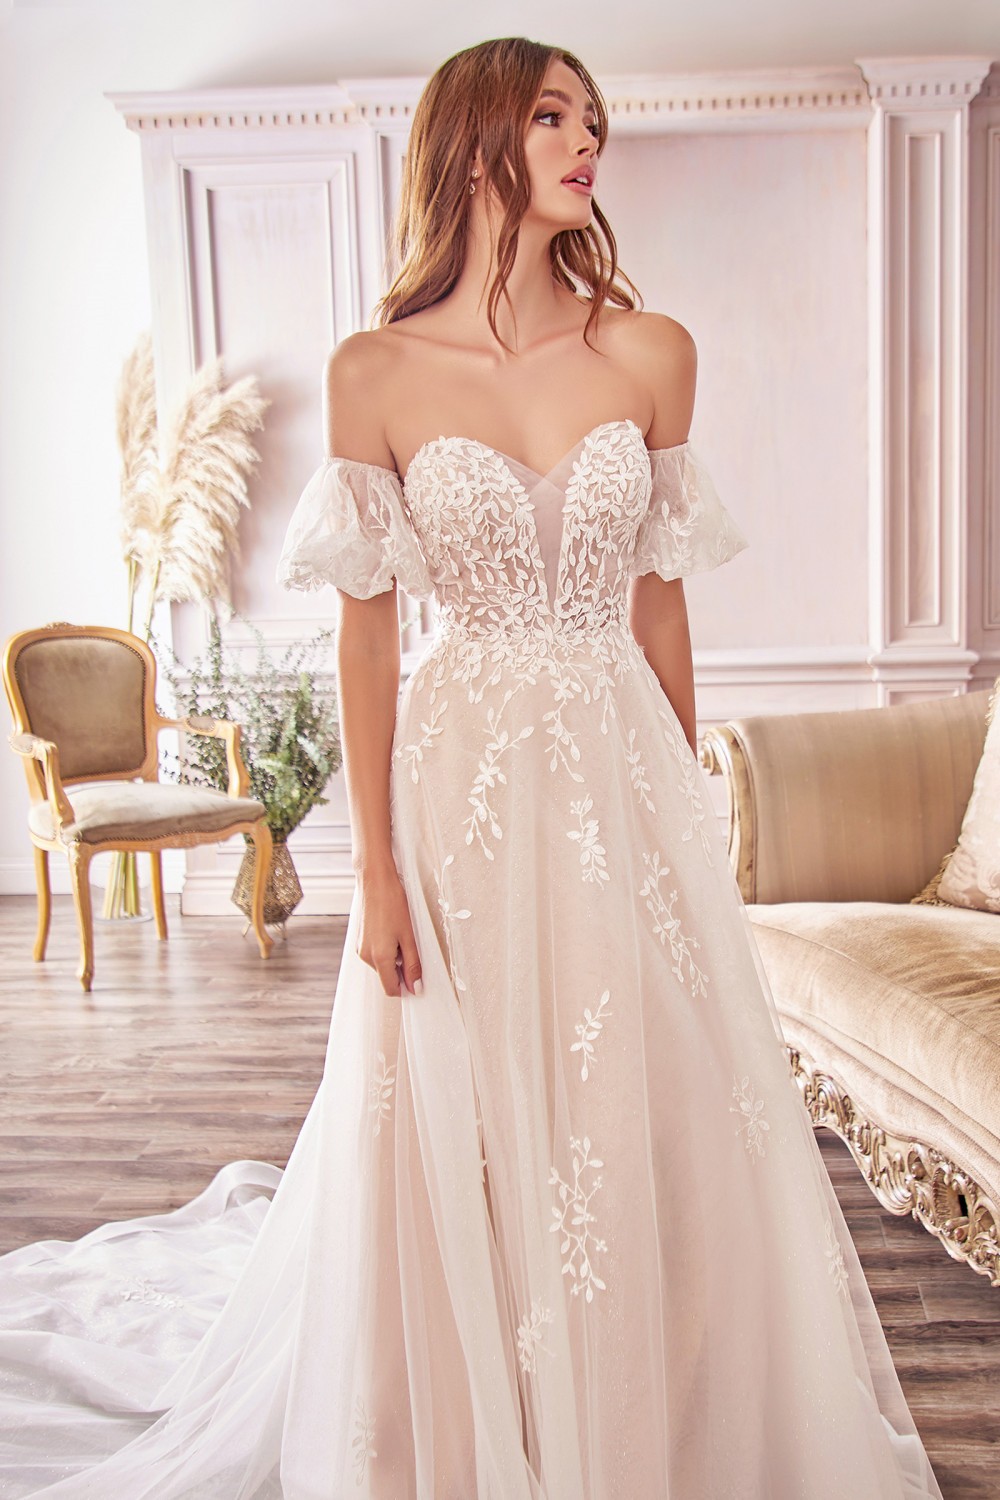 appliqued leaf motif A-line wedding dress with detachable puff sleeves